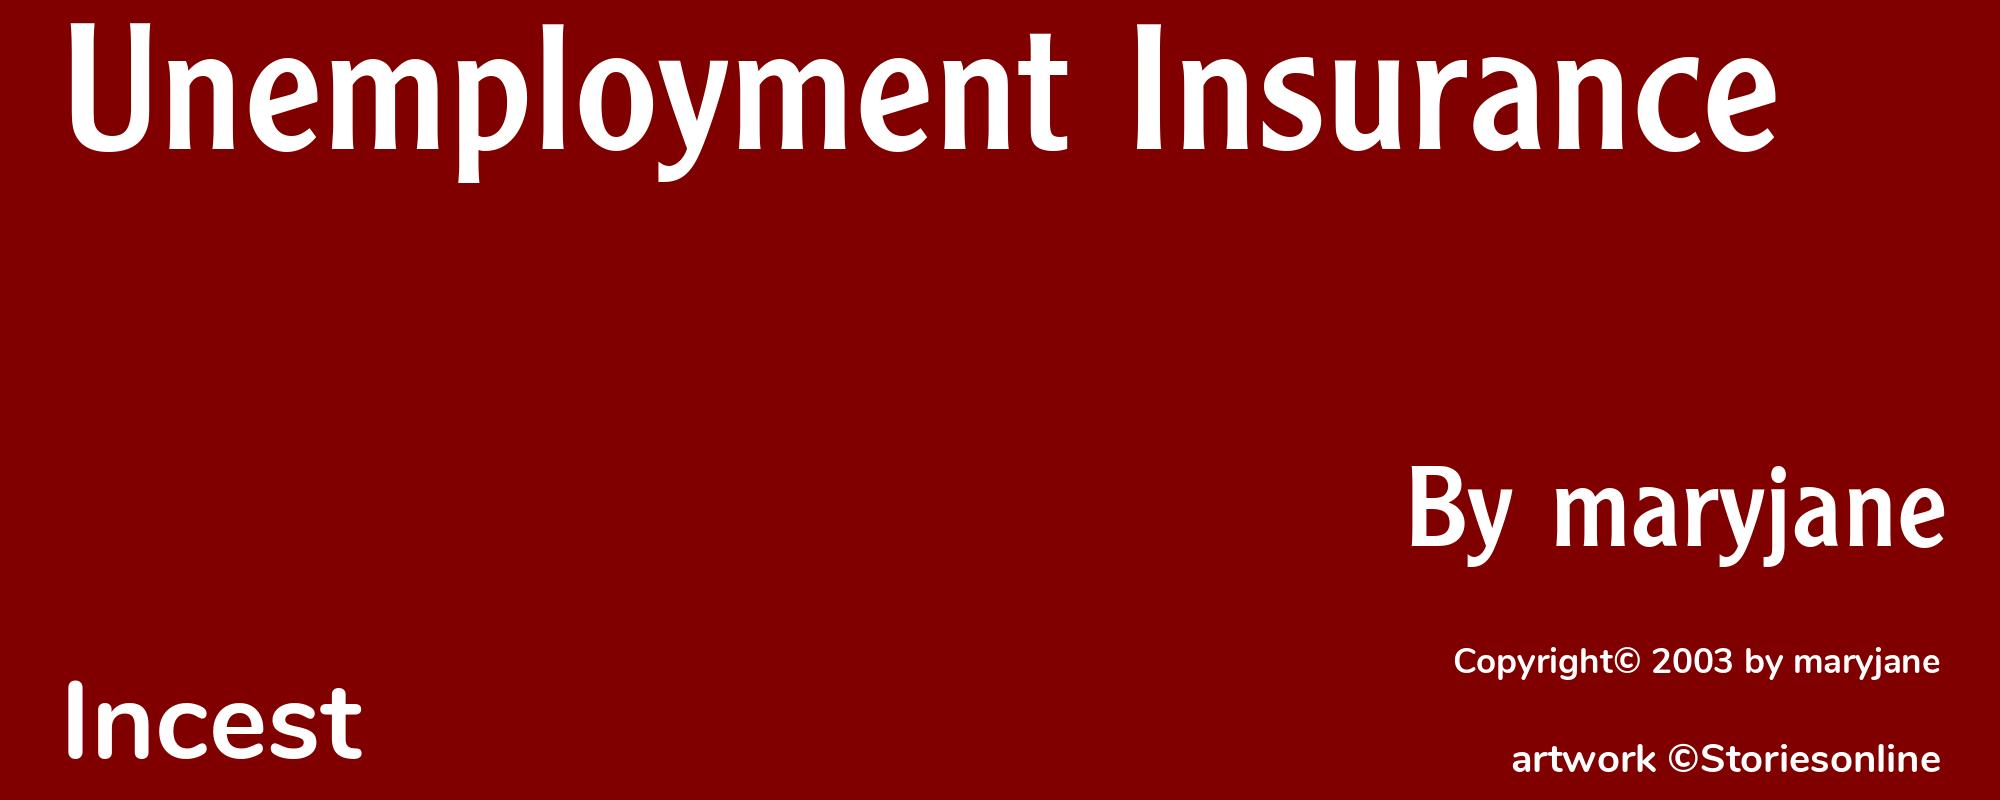 Unemployment Insurance - Cover